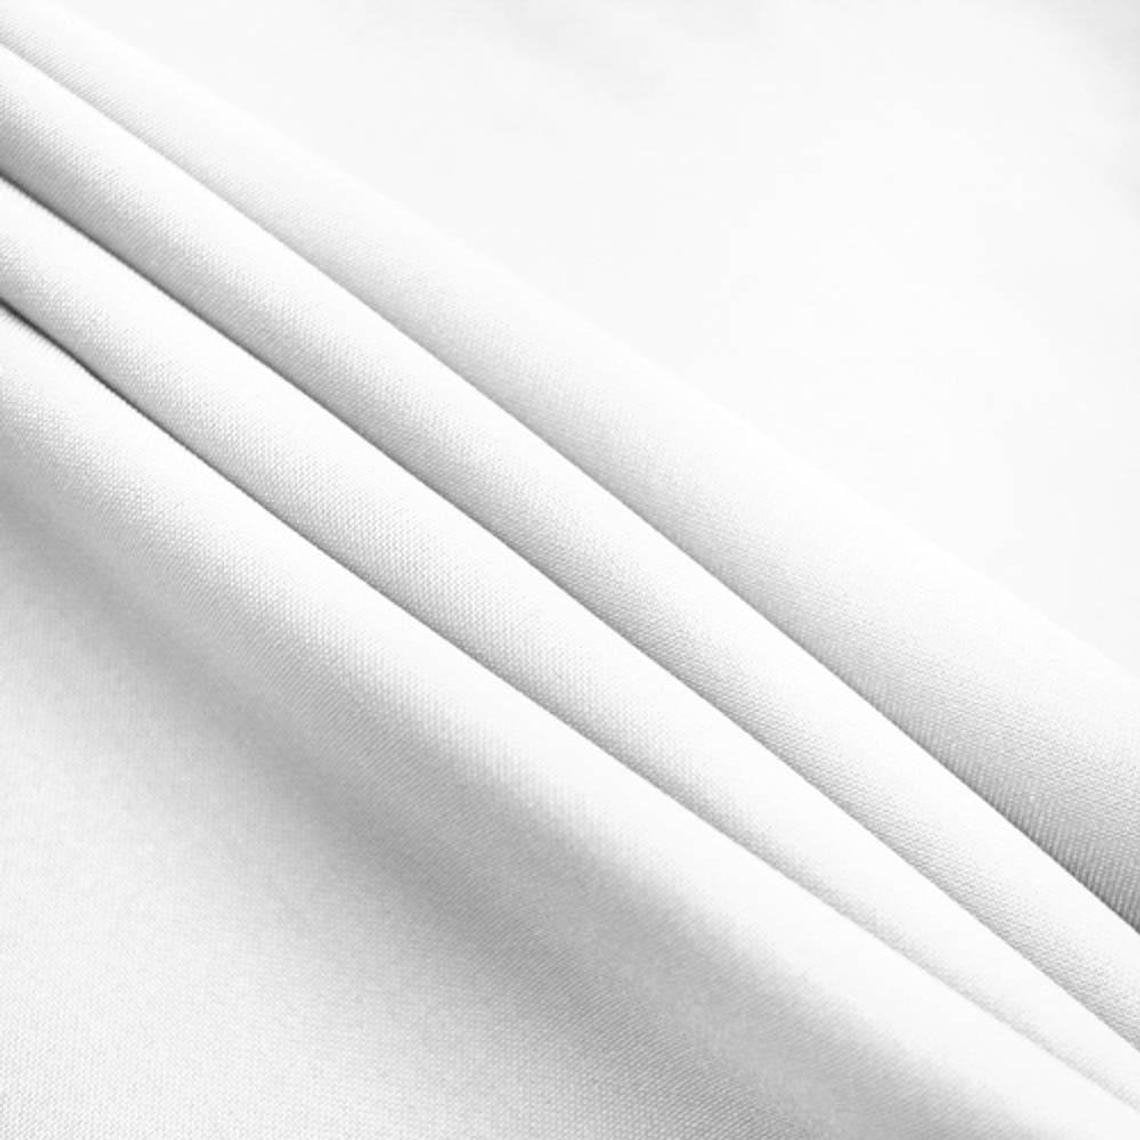 Poly Poplin Fabric By The Roll (40 Yards Bolt) Wholesale FabricPoplin FabricICE FABRICSICE FABRICSBy The Roll (60" Wide)WhitePoly Poplin Fabric By The Roll (40 Yards Bolt) Wholesale Fabric ICE FABRICS